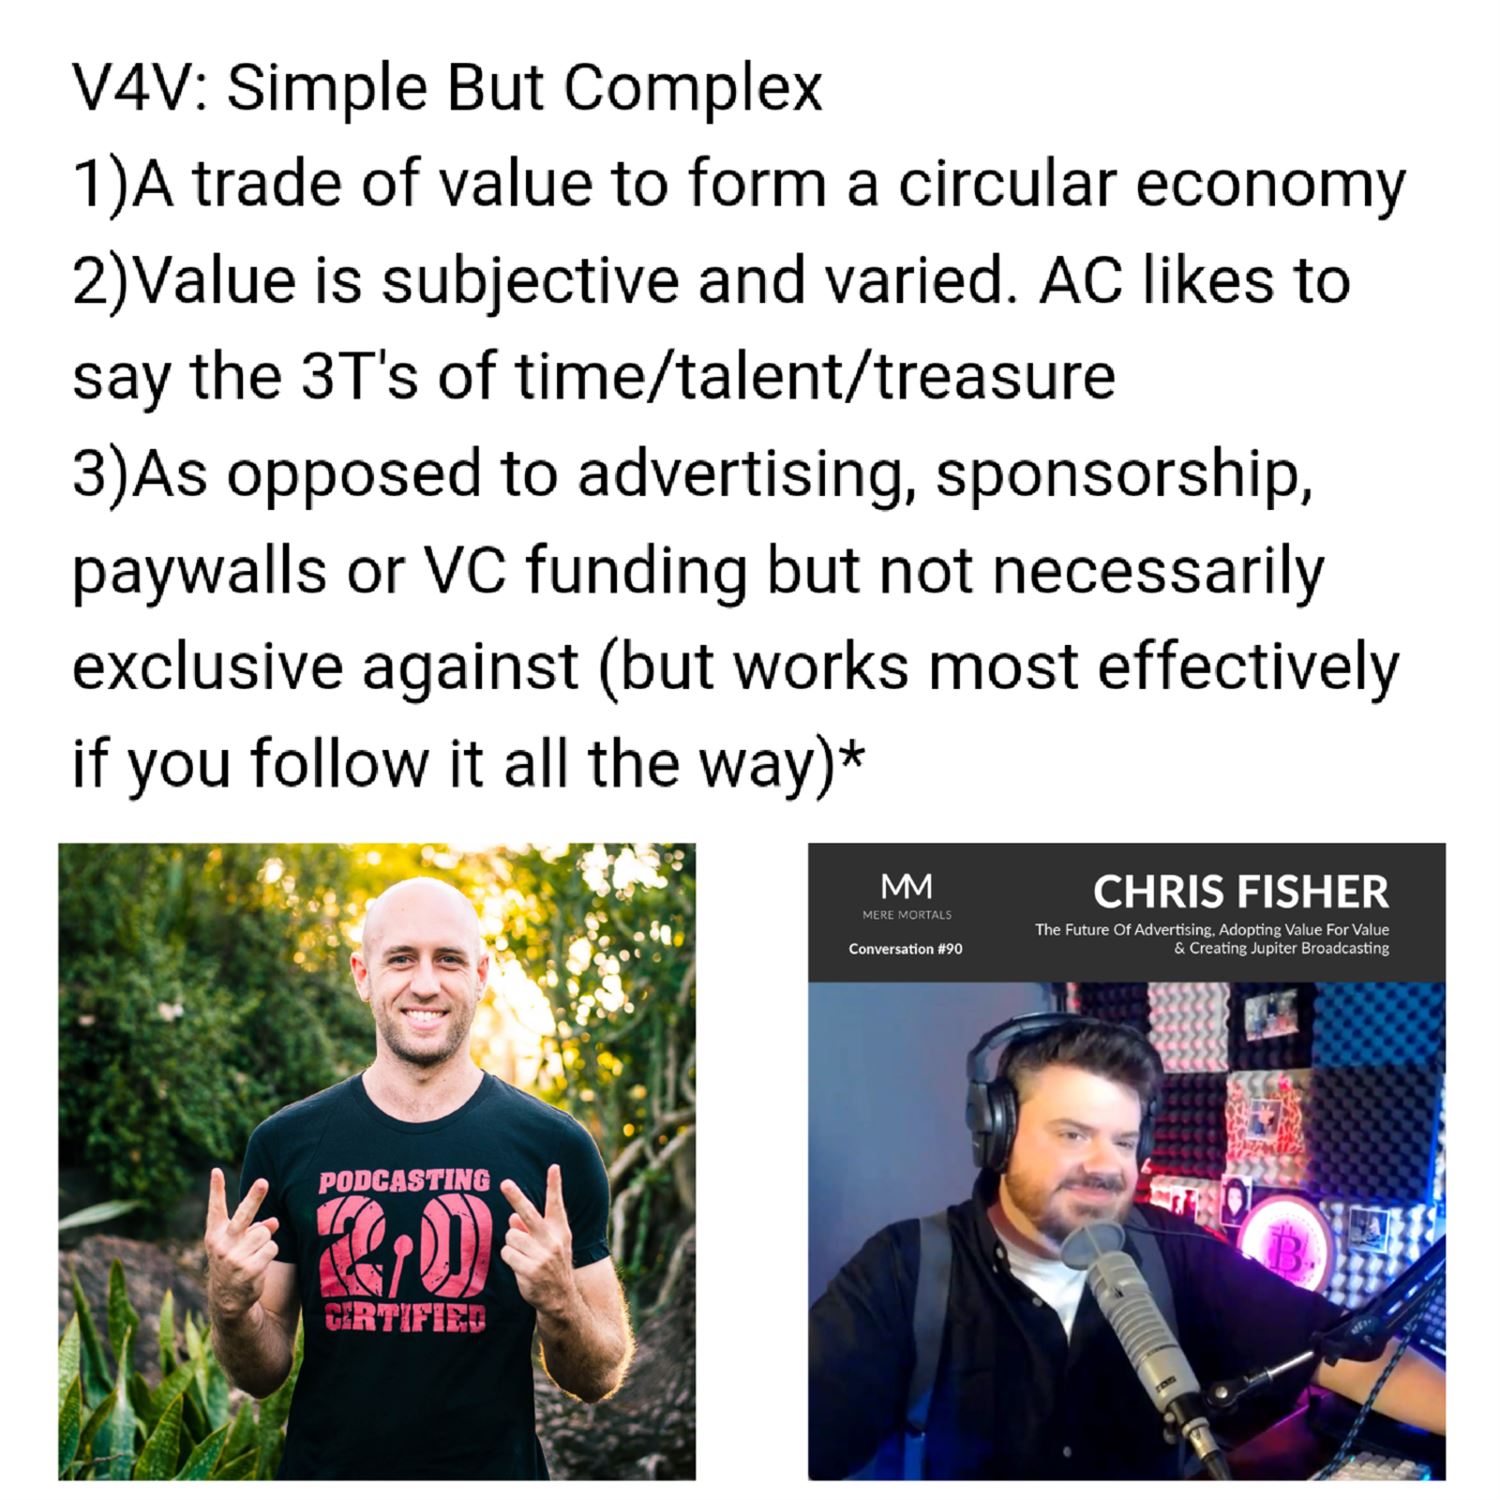 V4V: Simple but complex